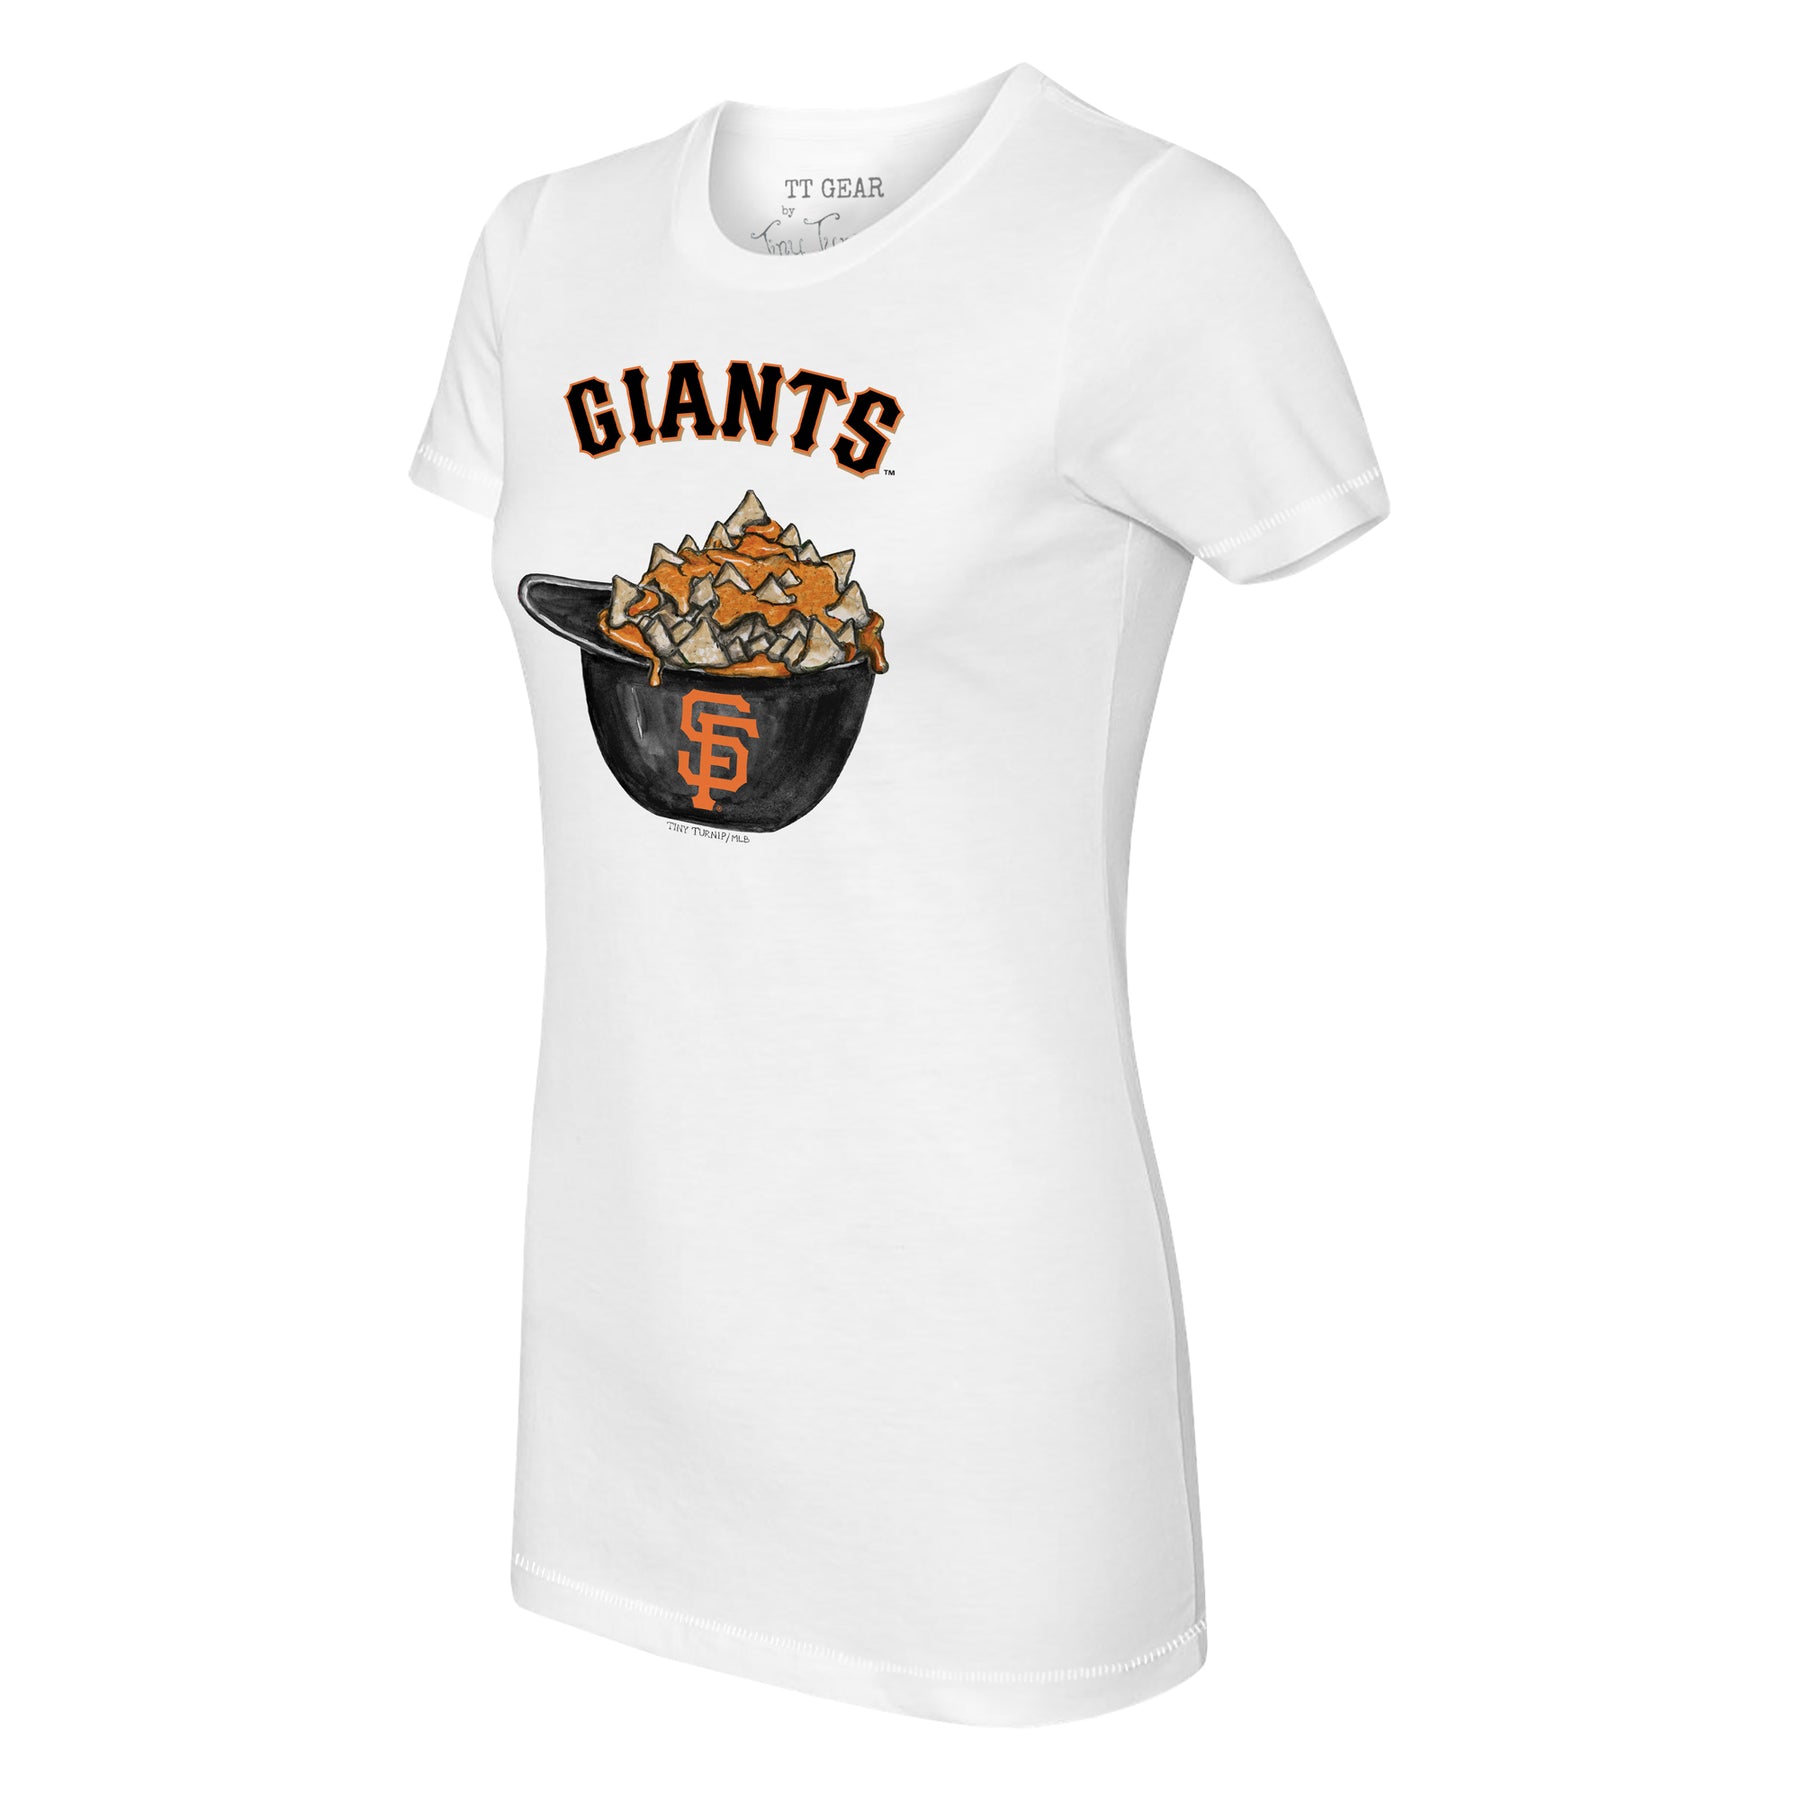 San Francisco Giants Maternity Shirts